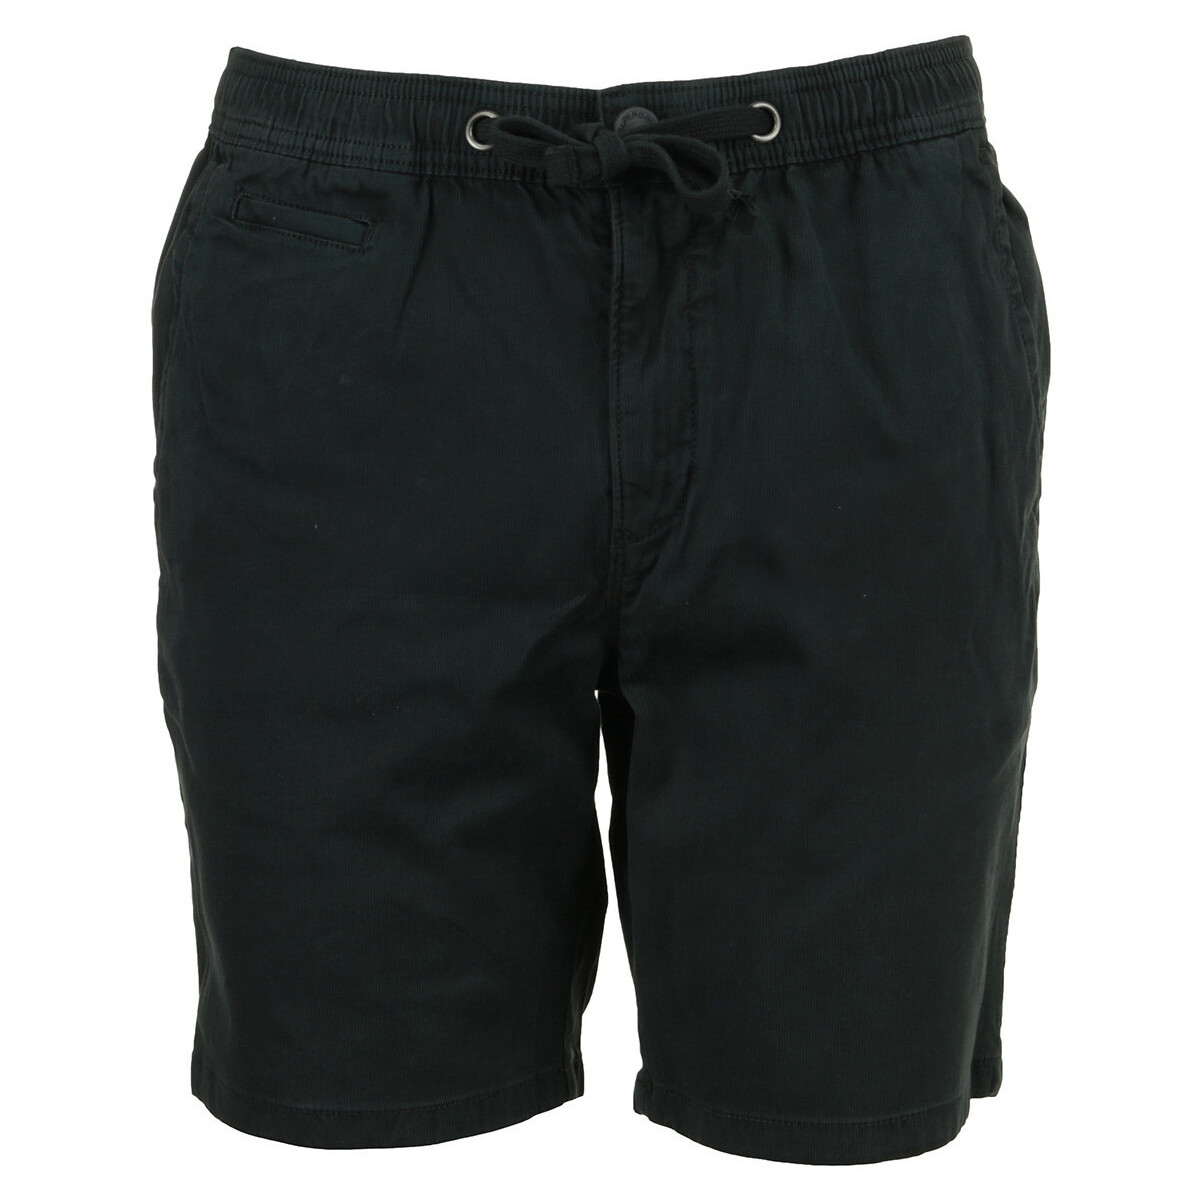 Vêtements Homme Shorts / Bermudas Superdry Sunscorched Chino Short Bleu